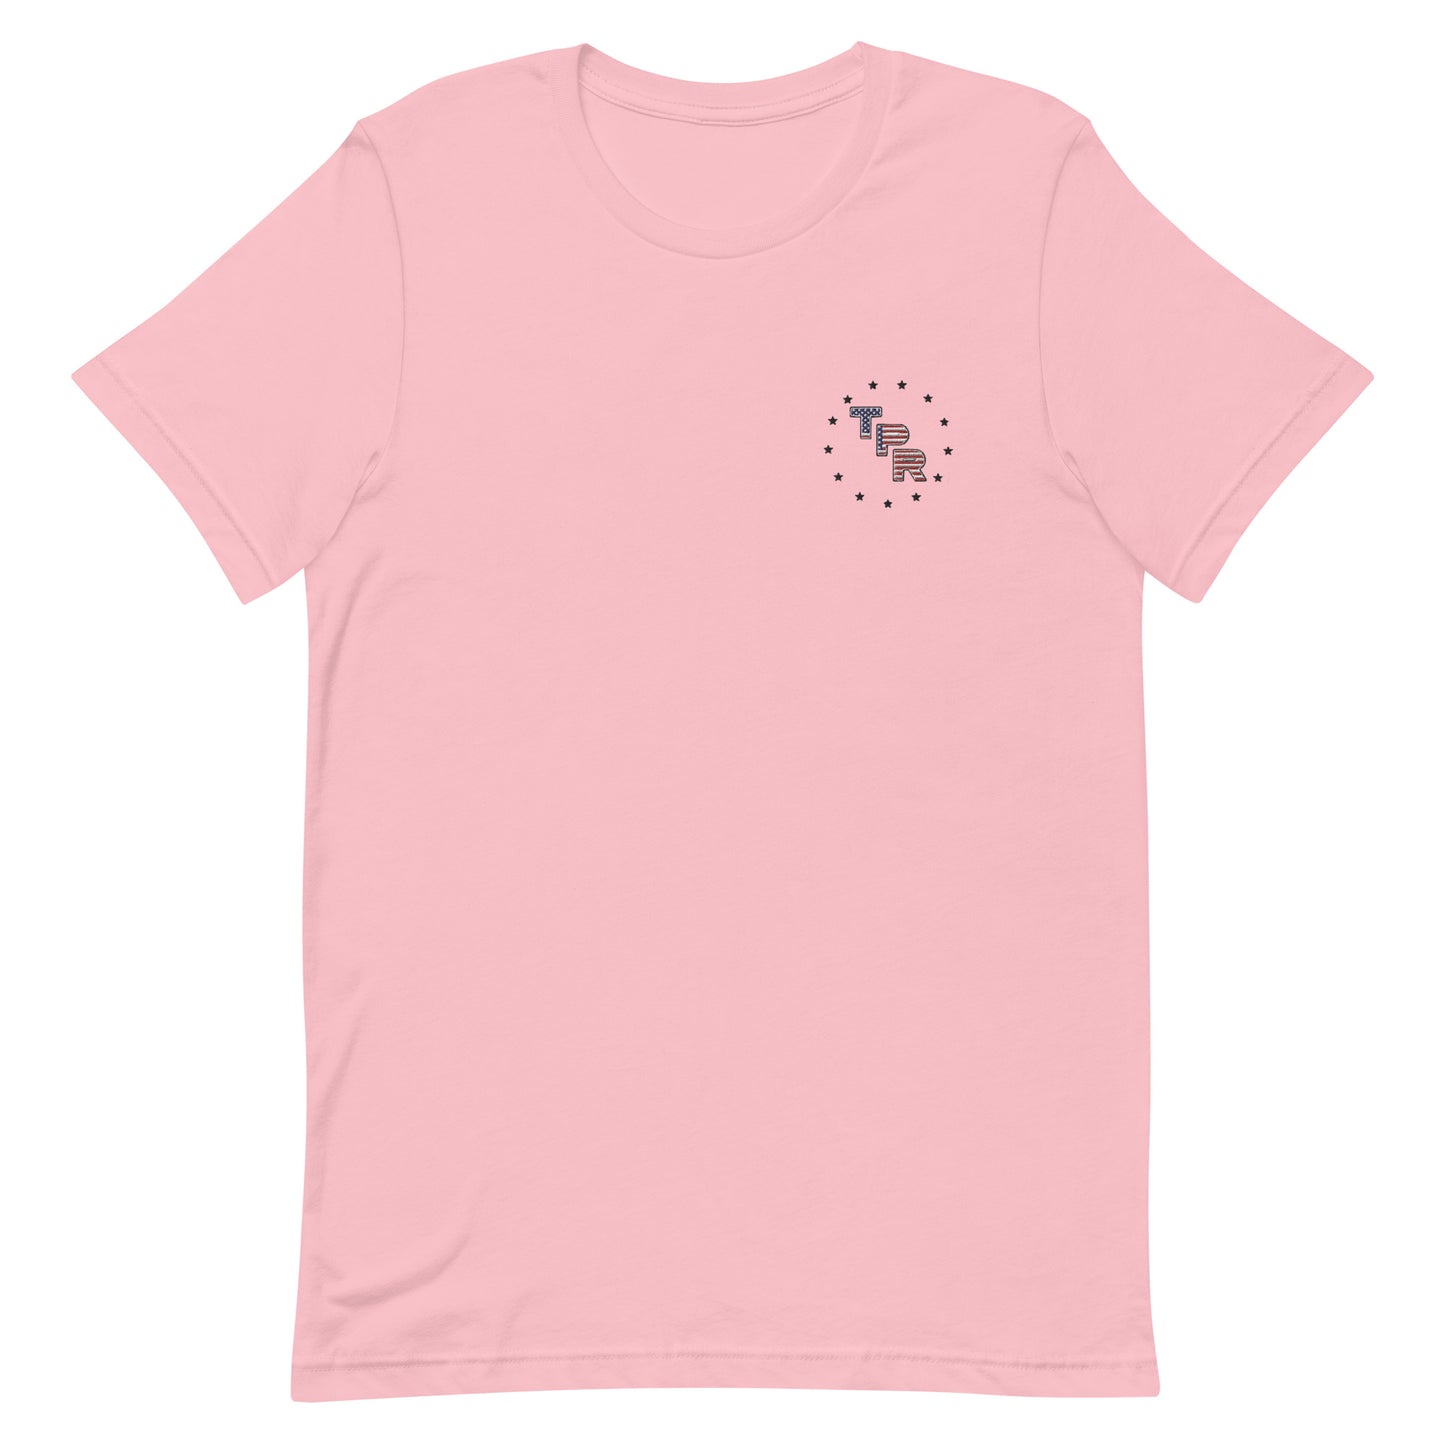 American-flag-edition-unisex-t-shirt-Pink